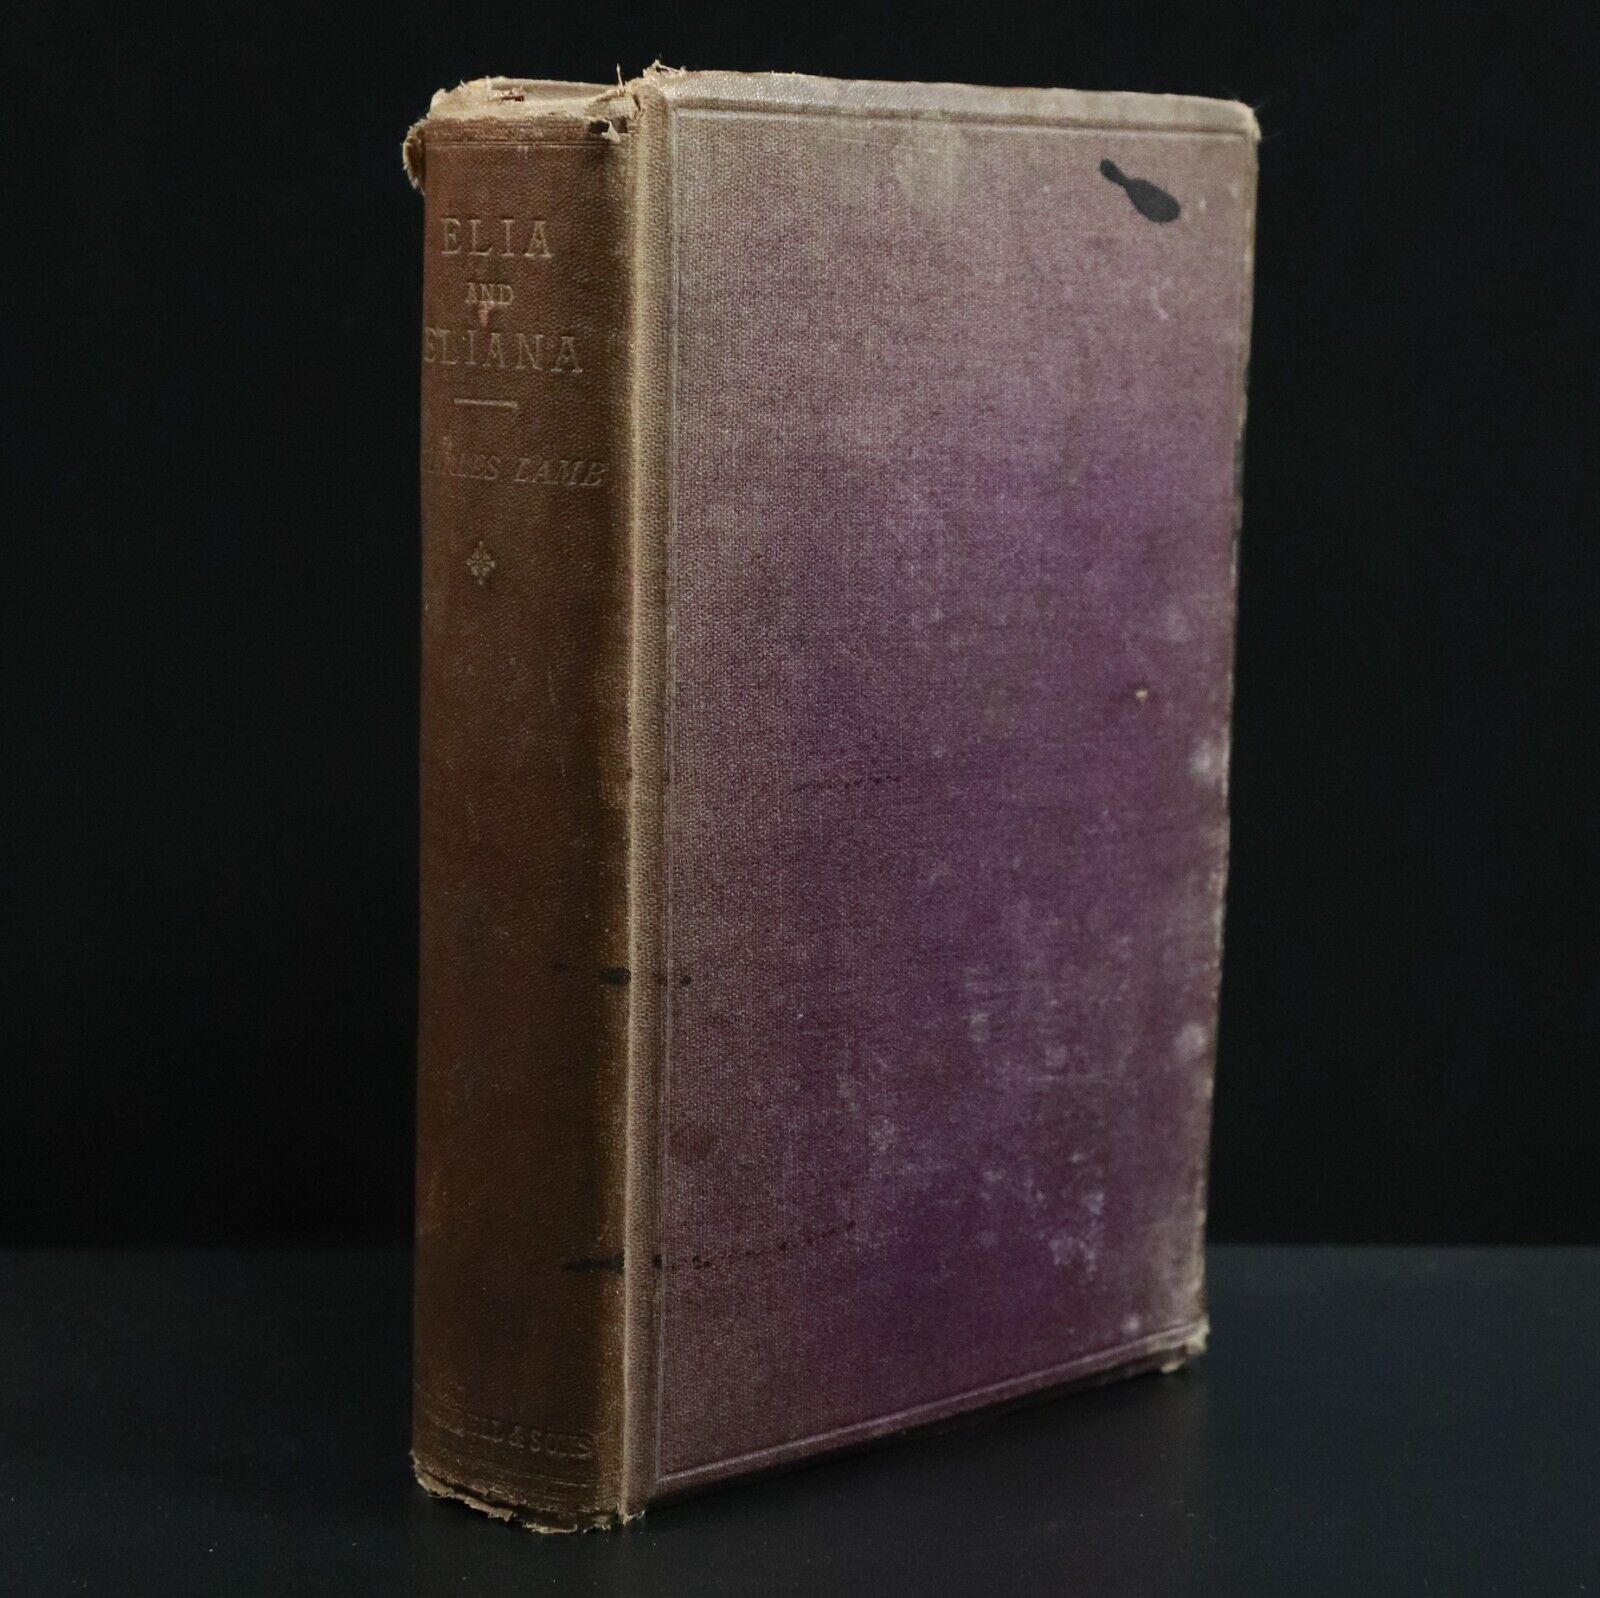 1871 The Essays Of Elia & Eliana by Charles Lamb Antiquarian Literature Book